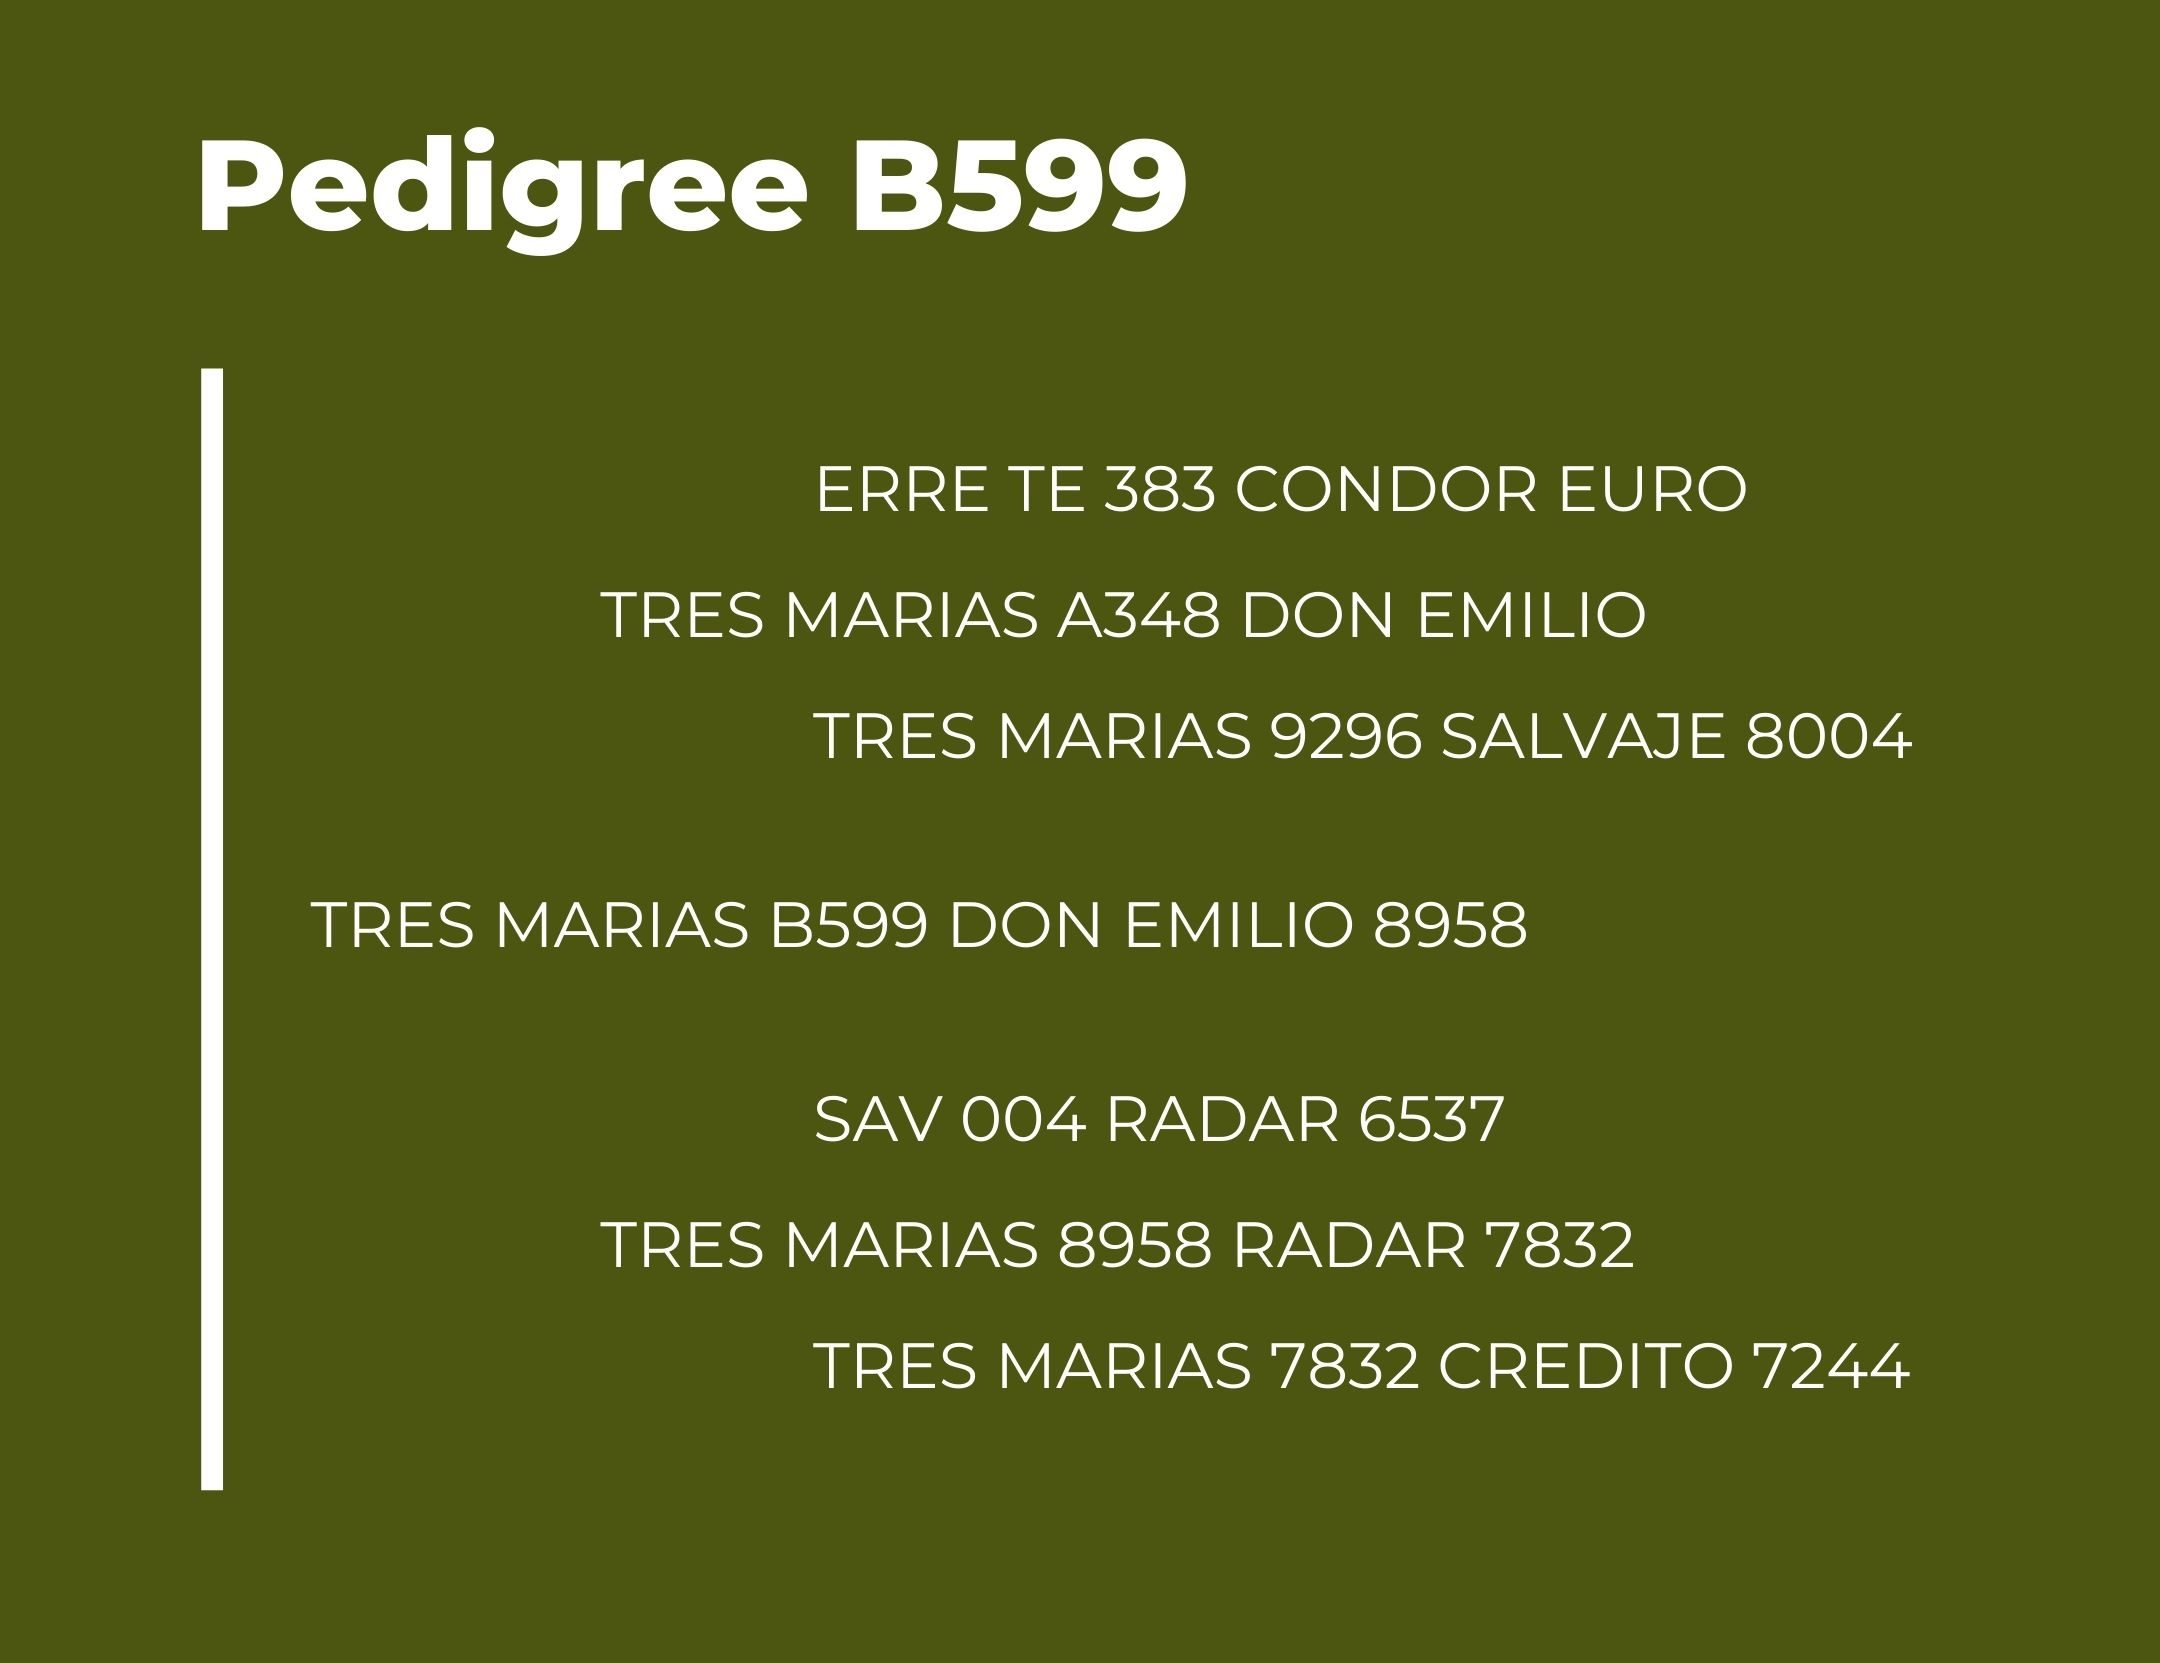 Catalogo Tres Marias Pedigree B599